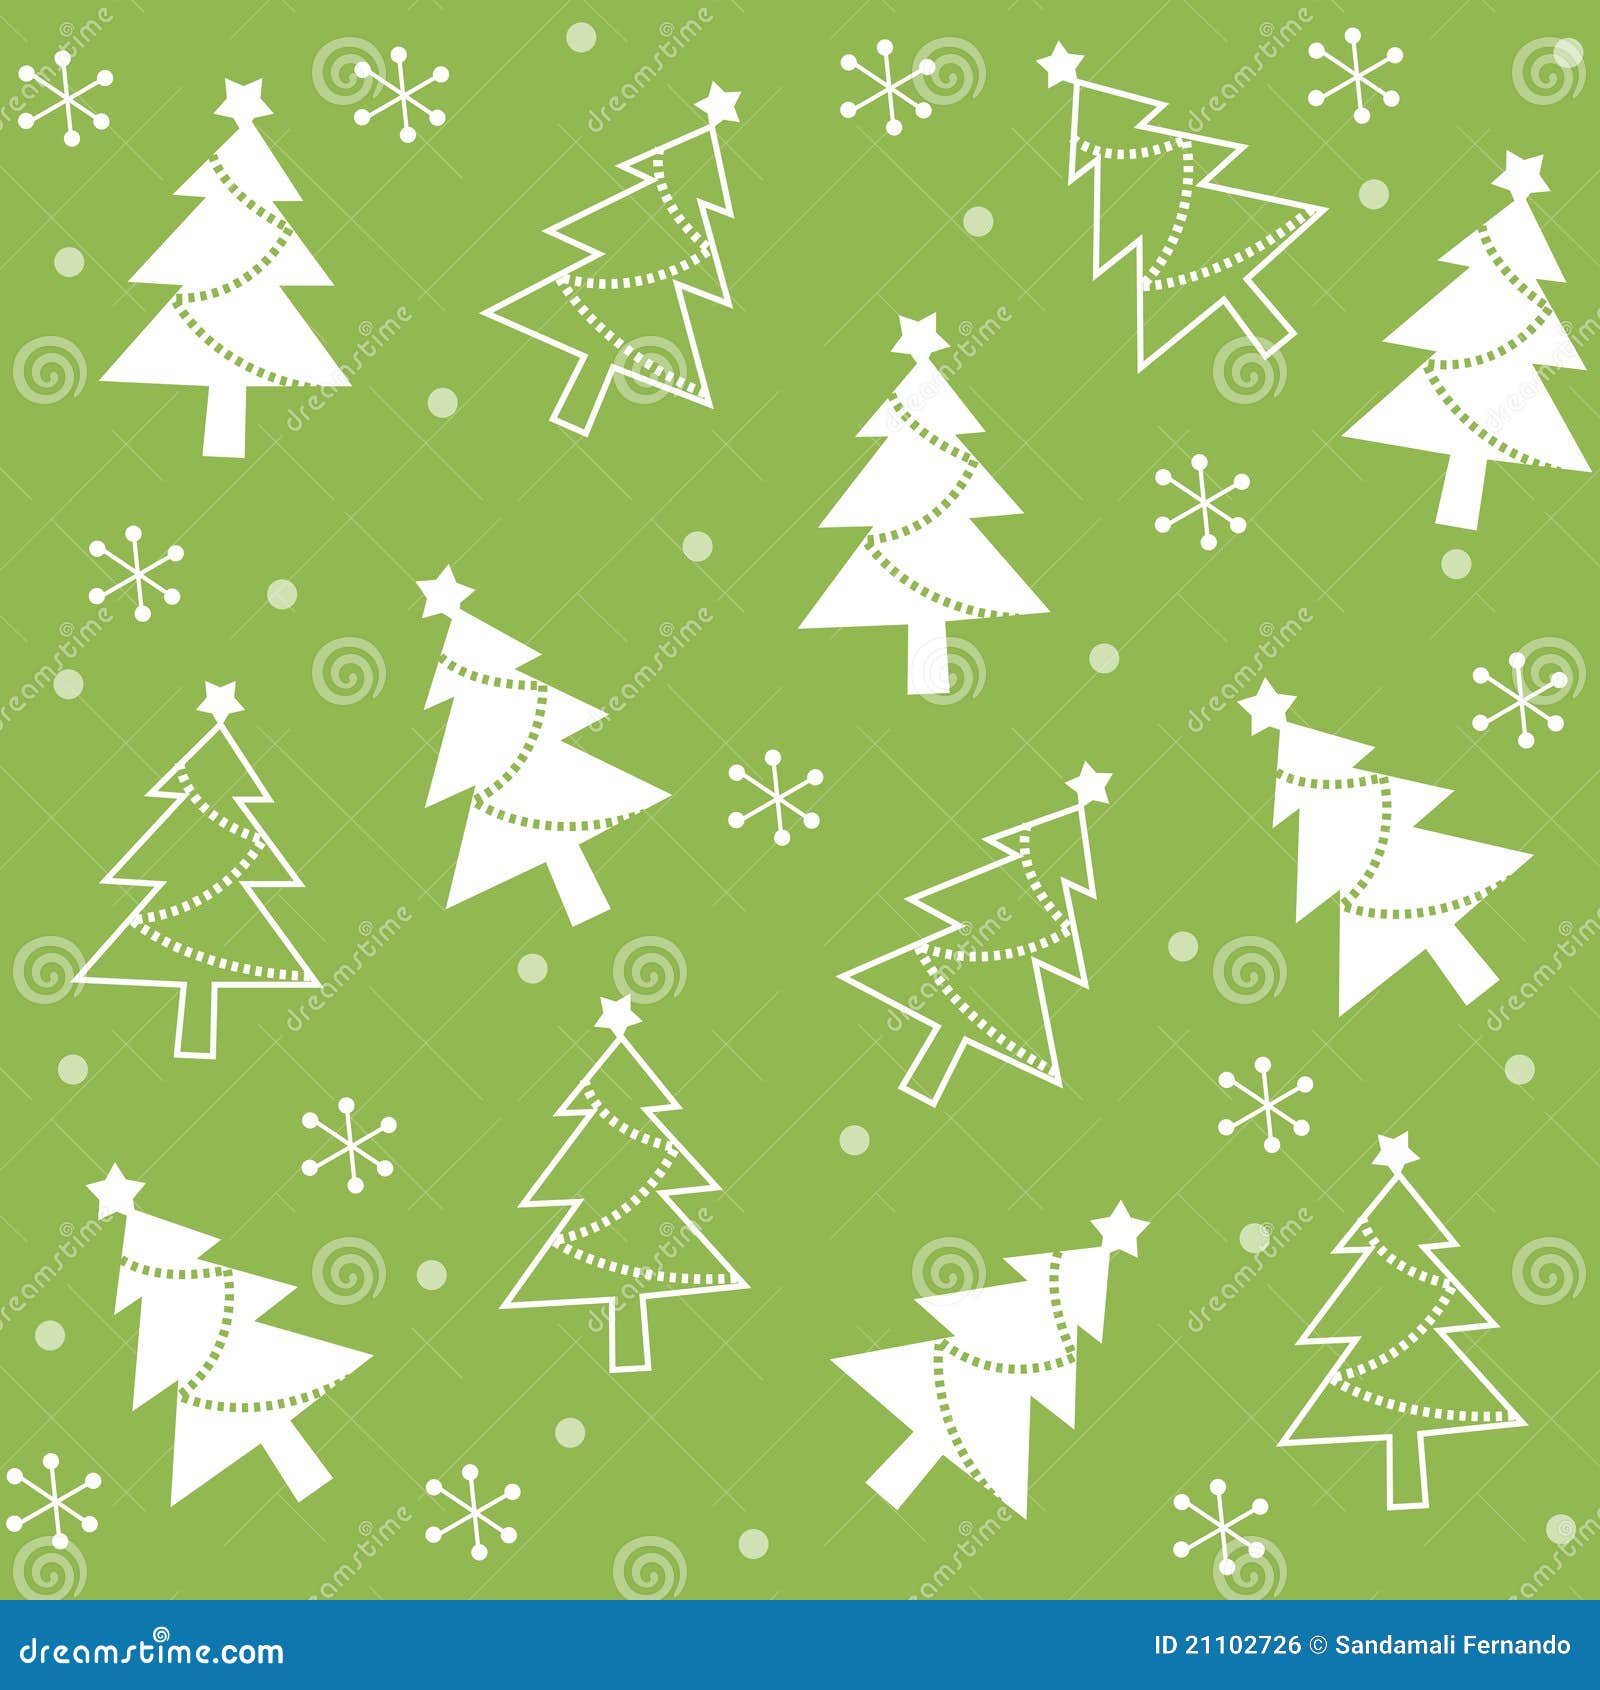 Christmas semless pattern stock vector. Illustration of christmas ...